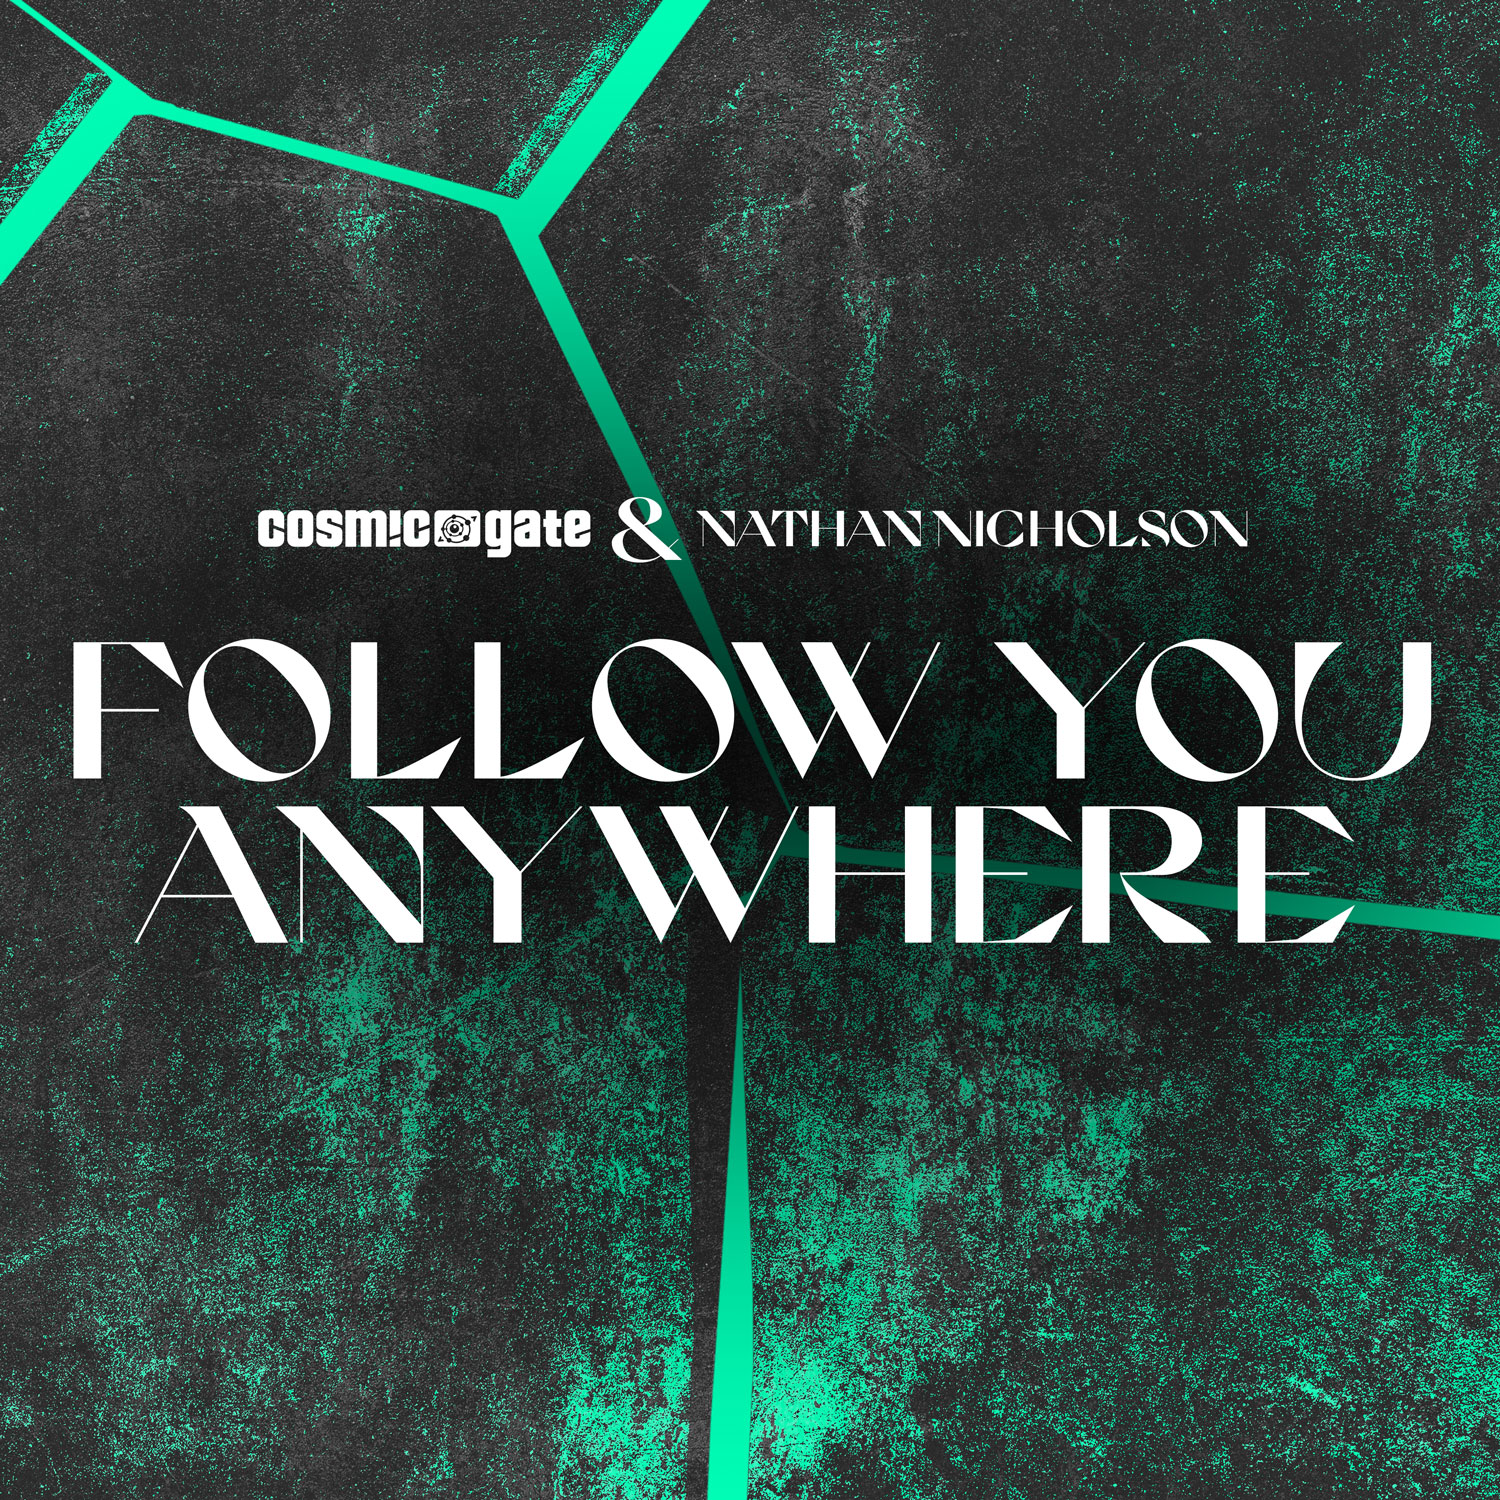 new single “Follow You Anywhere”